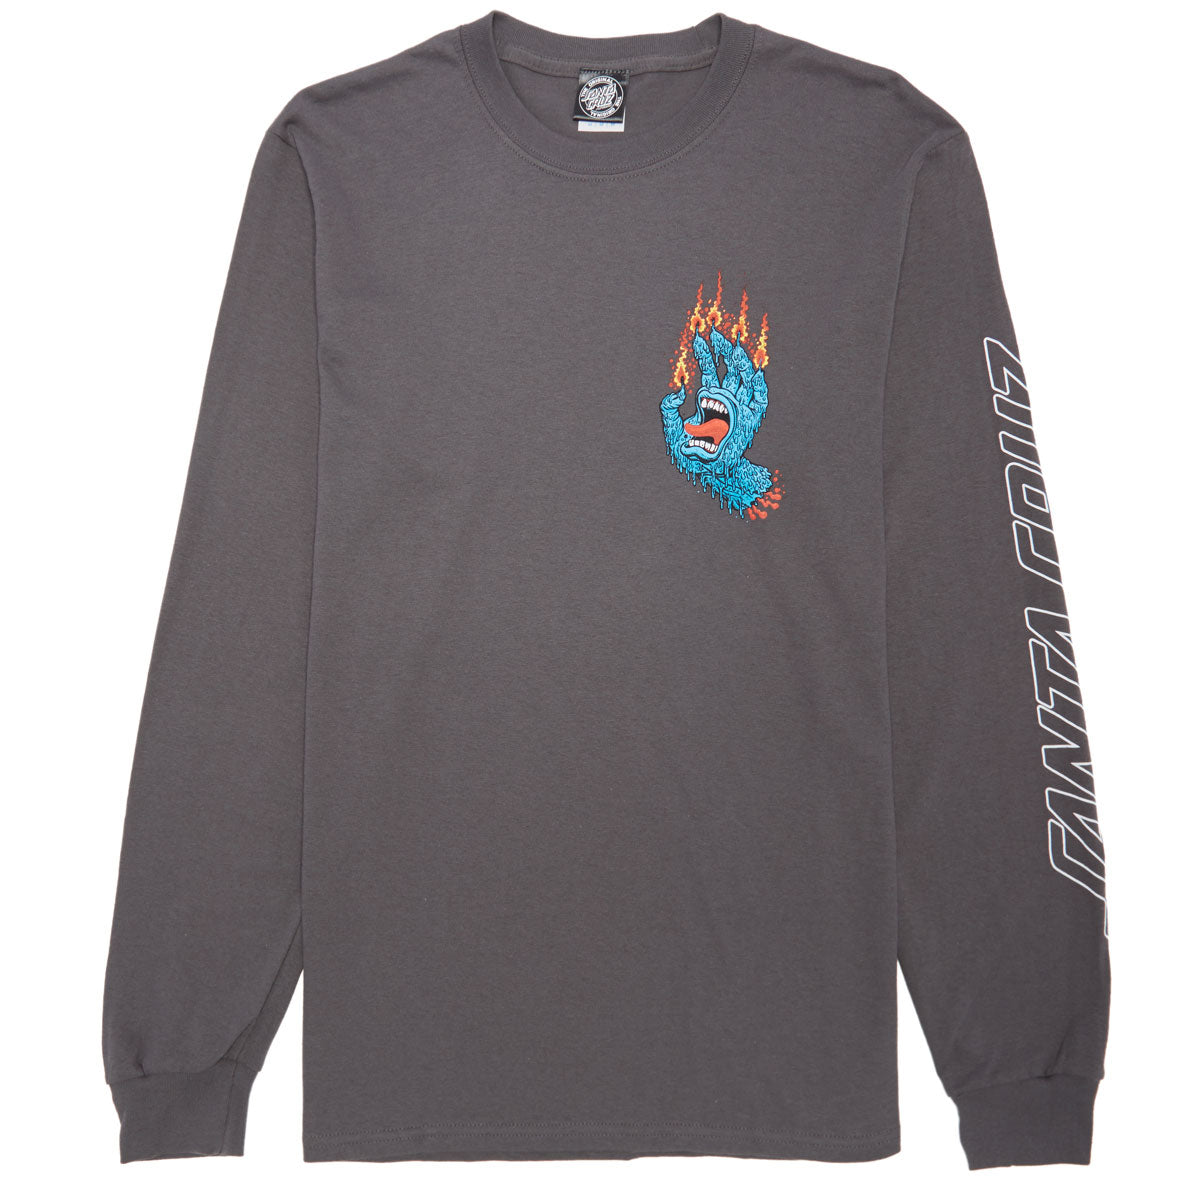 Santa Cruz Pace Ritual Hand Long Sleeve T-Shirt - Charcoal image 1